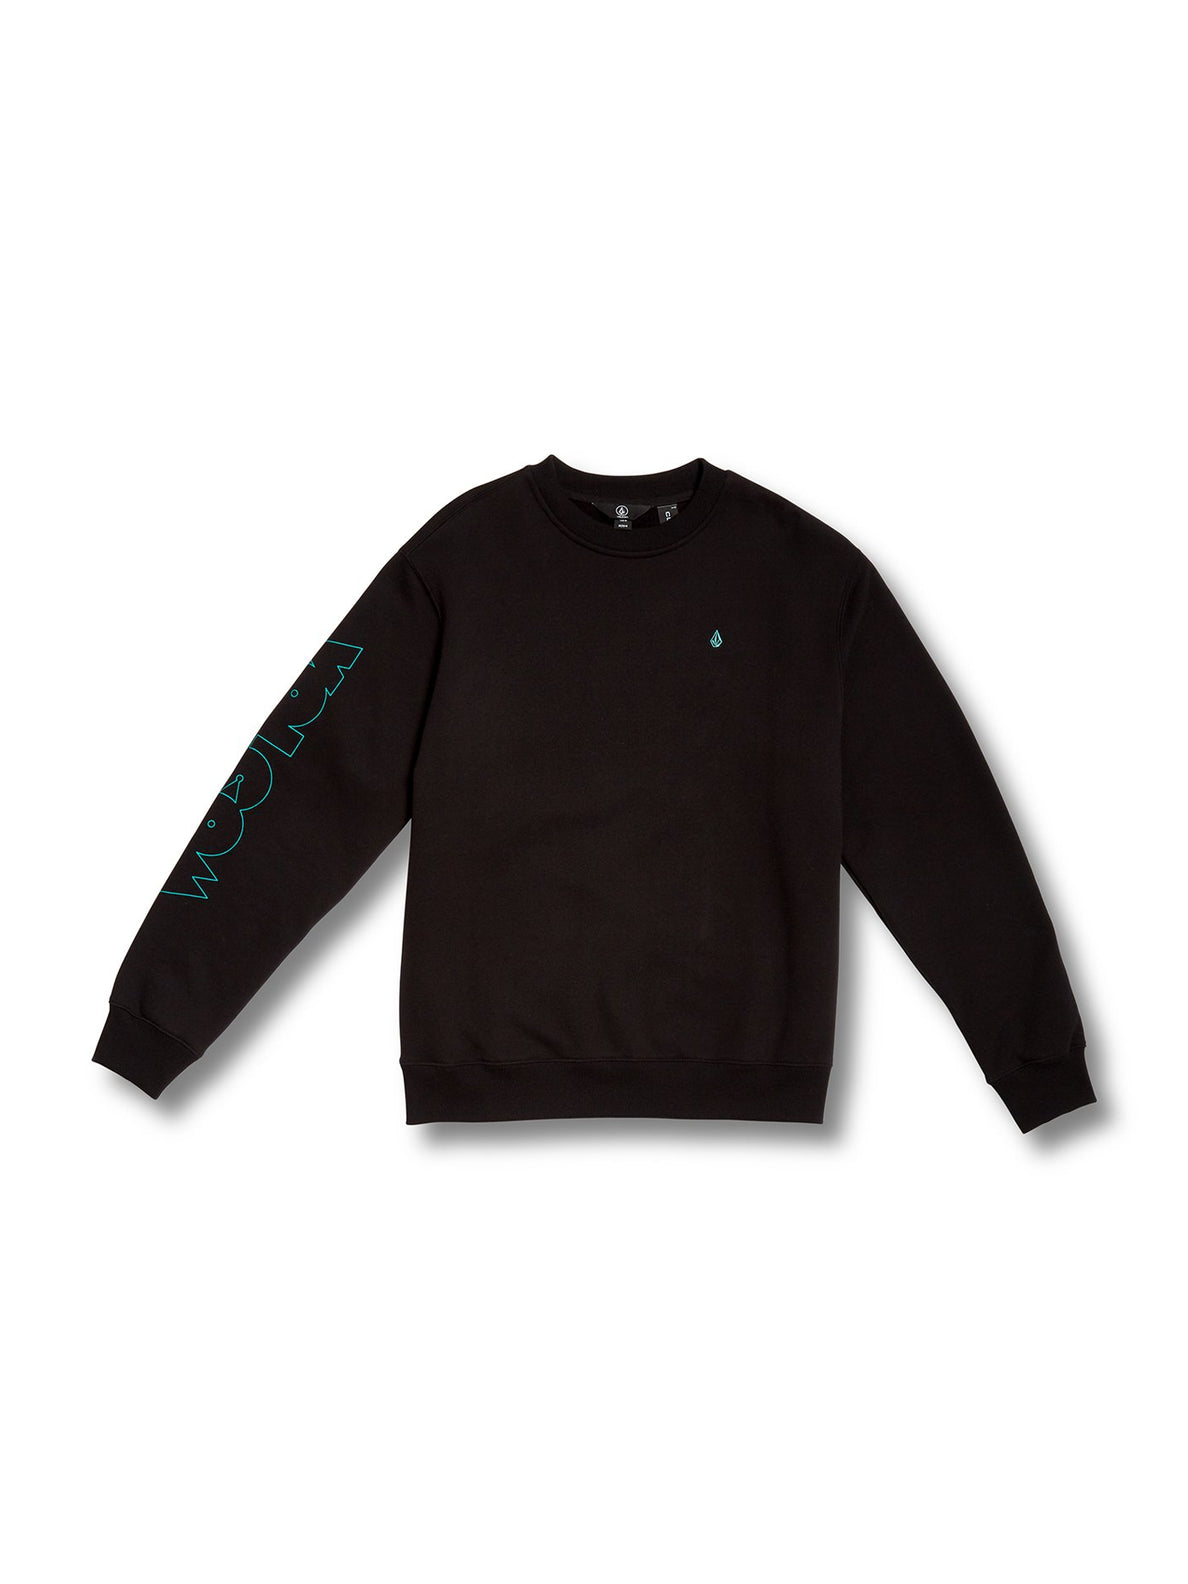 Max Loeffler Sweatshirt - BLACK (A4632105_BLK) [30]